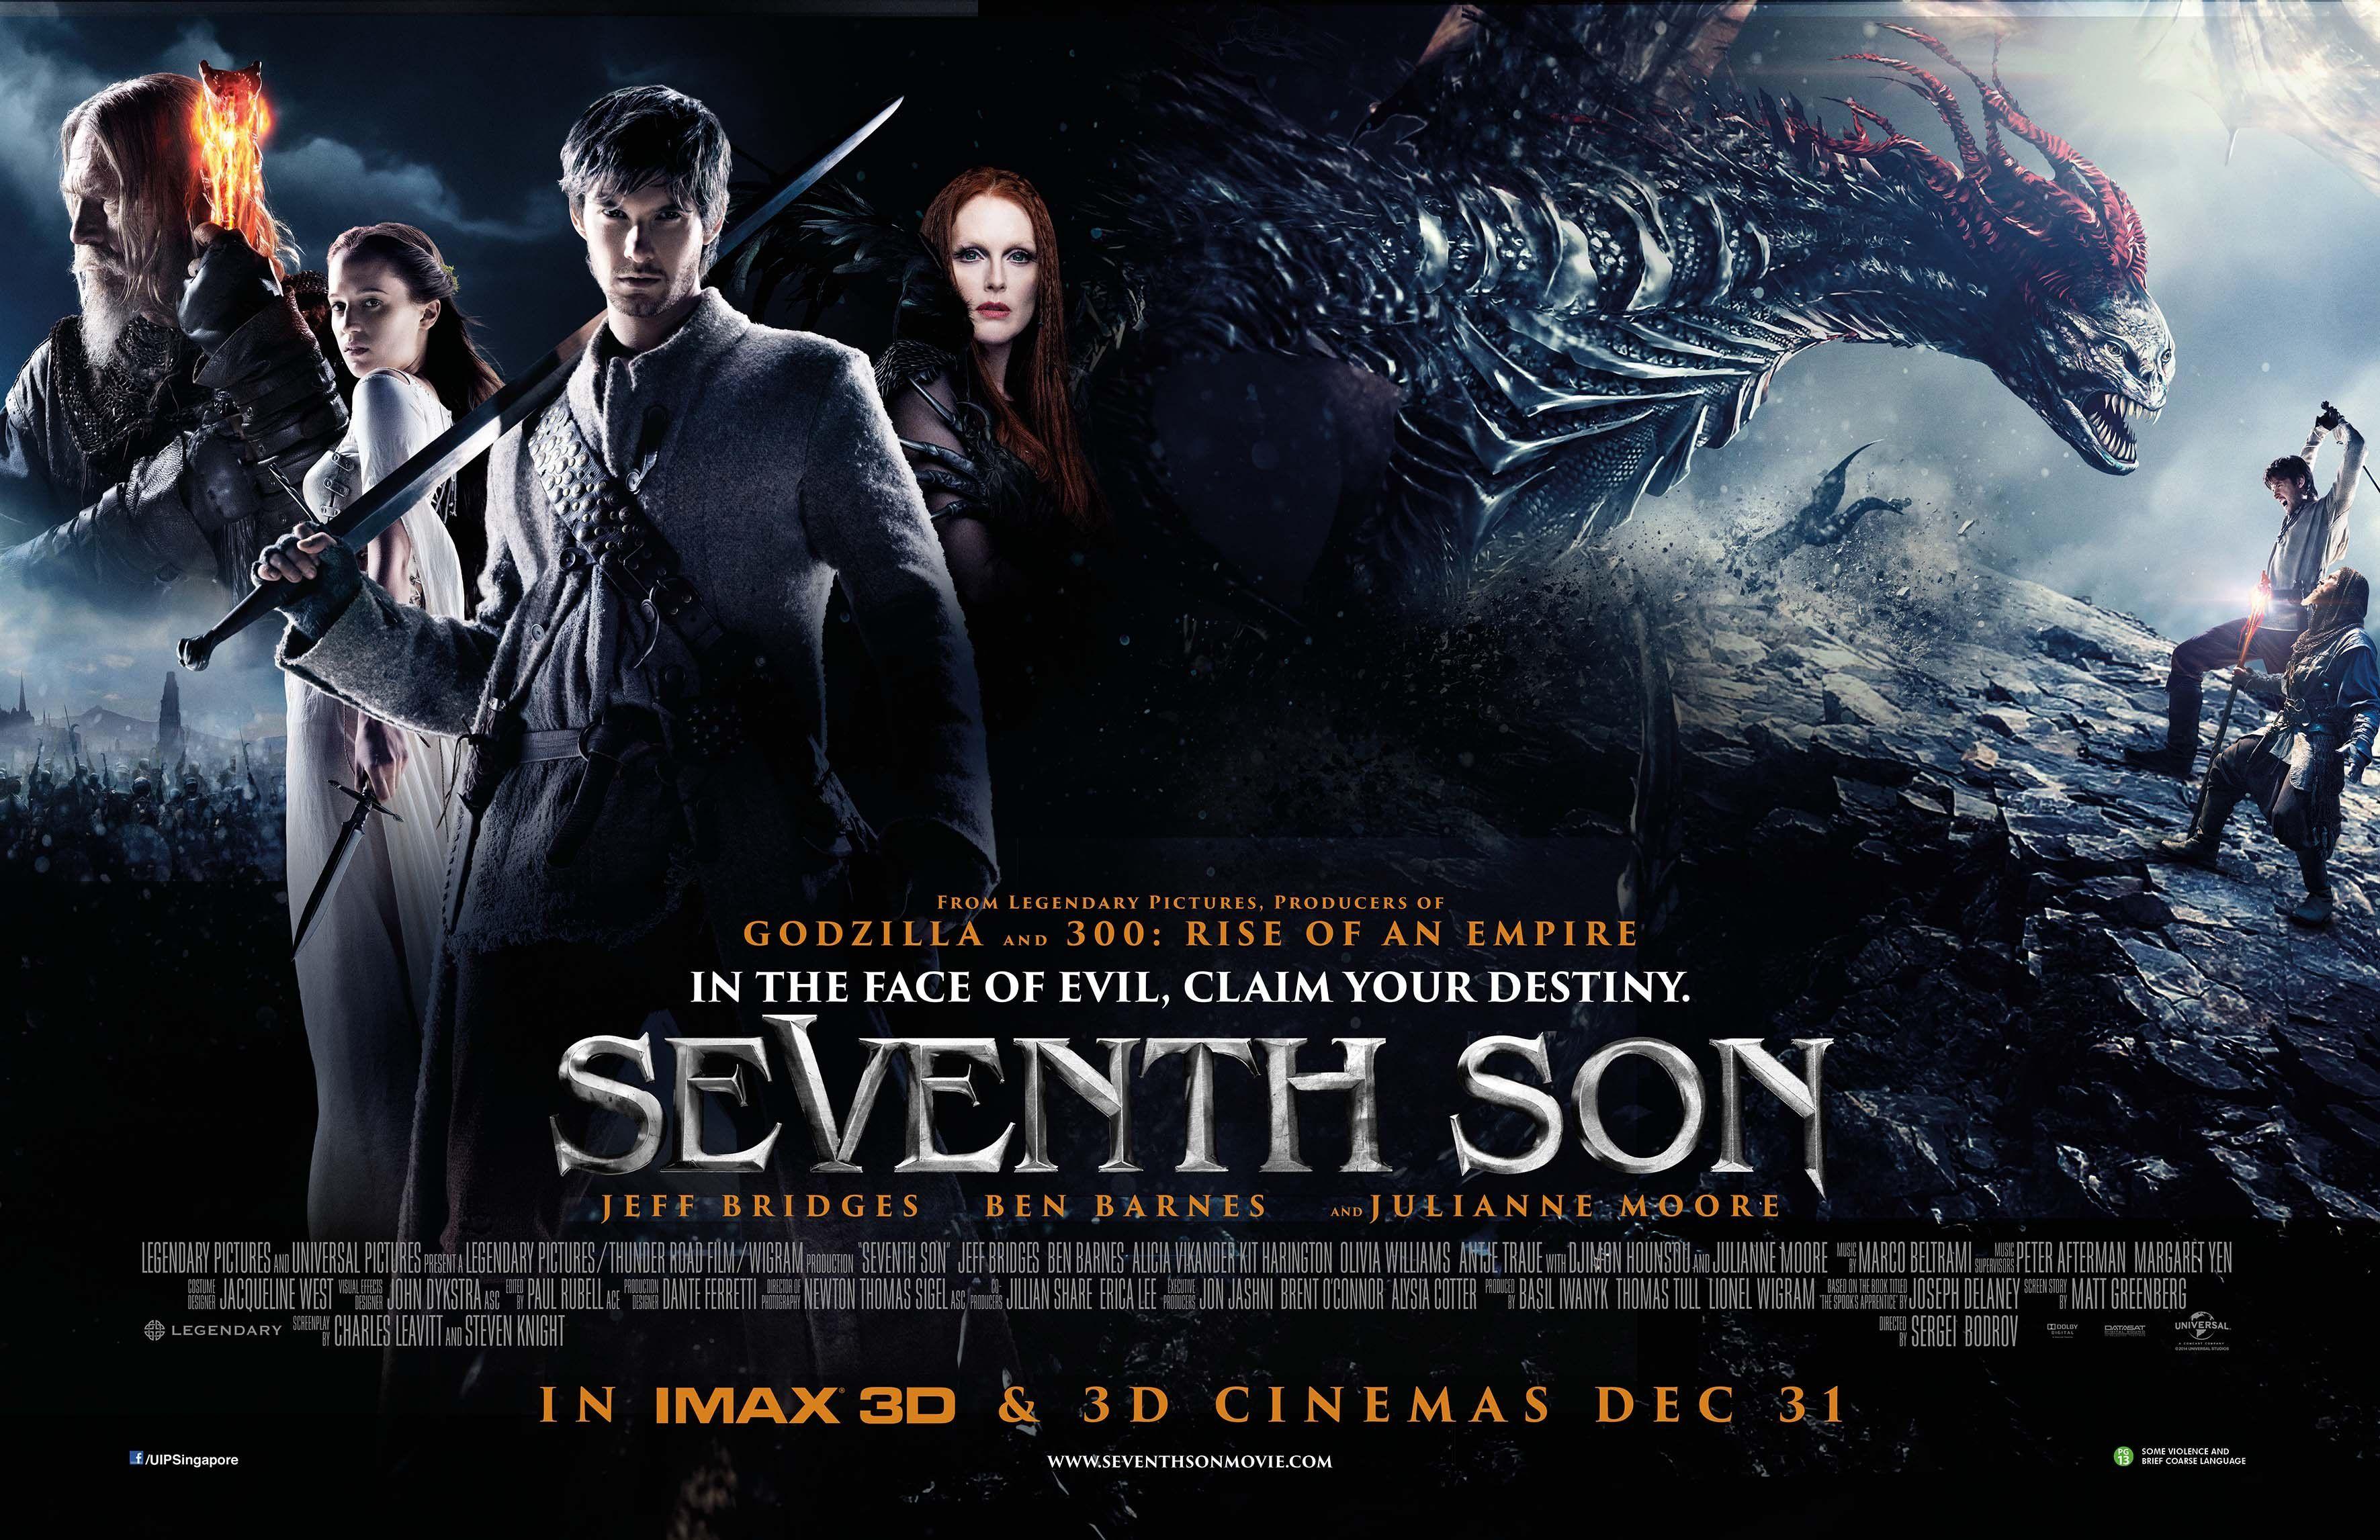 Movies Seventh Son Movie wallpaper Desktop, Phone, Tablet